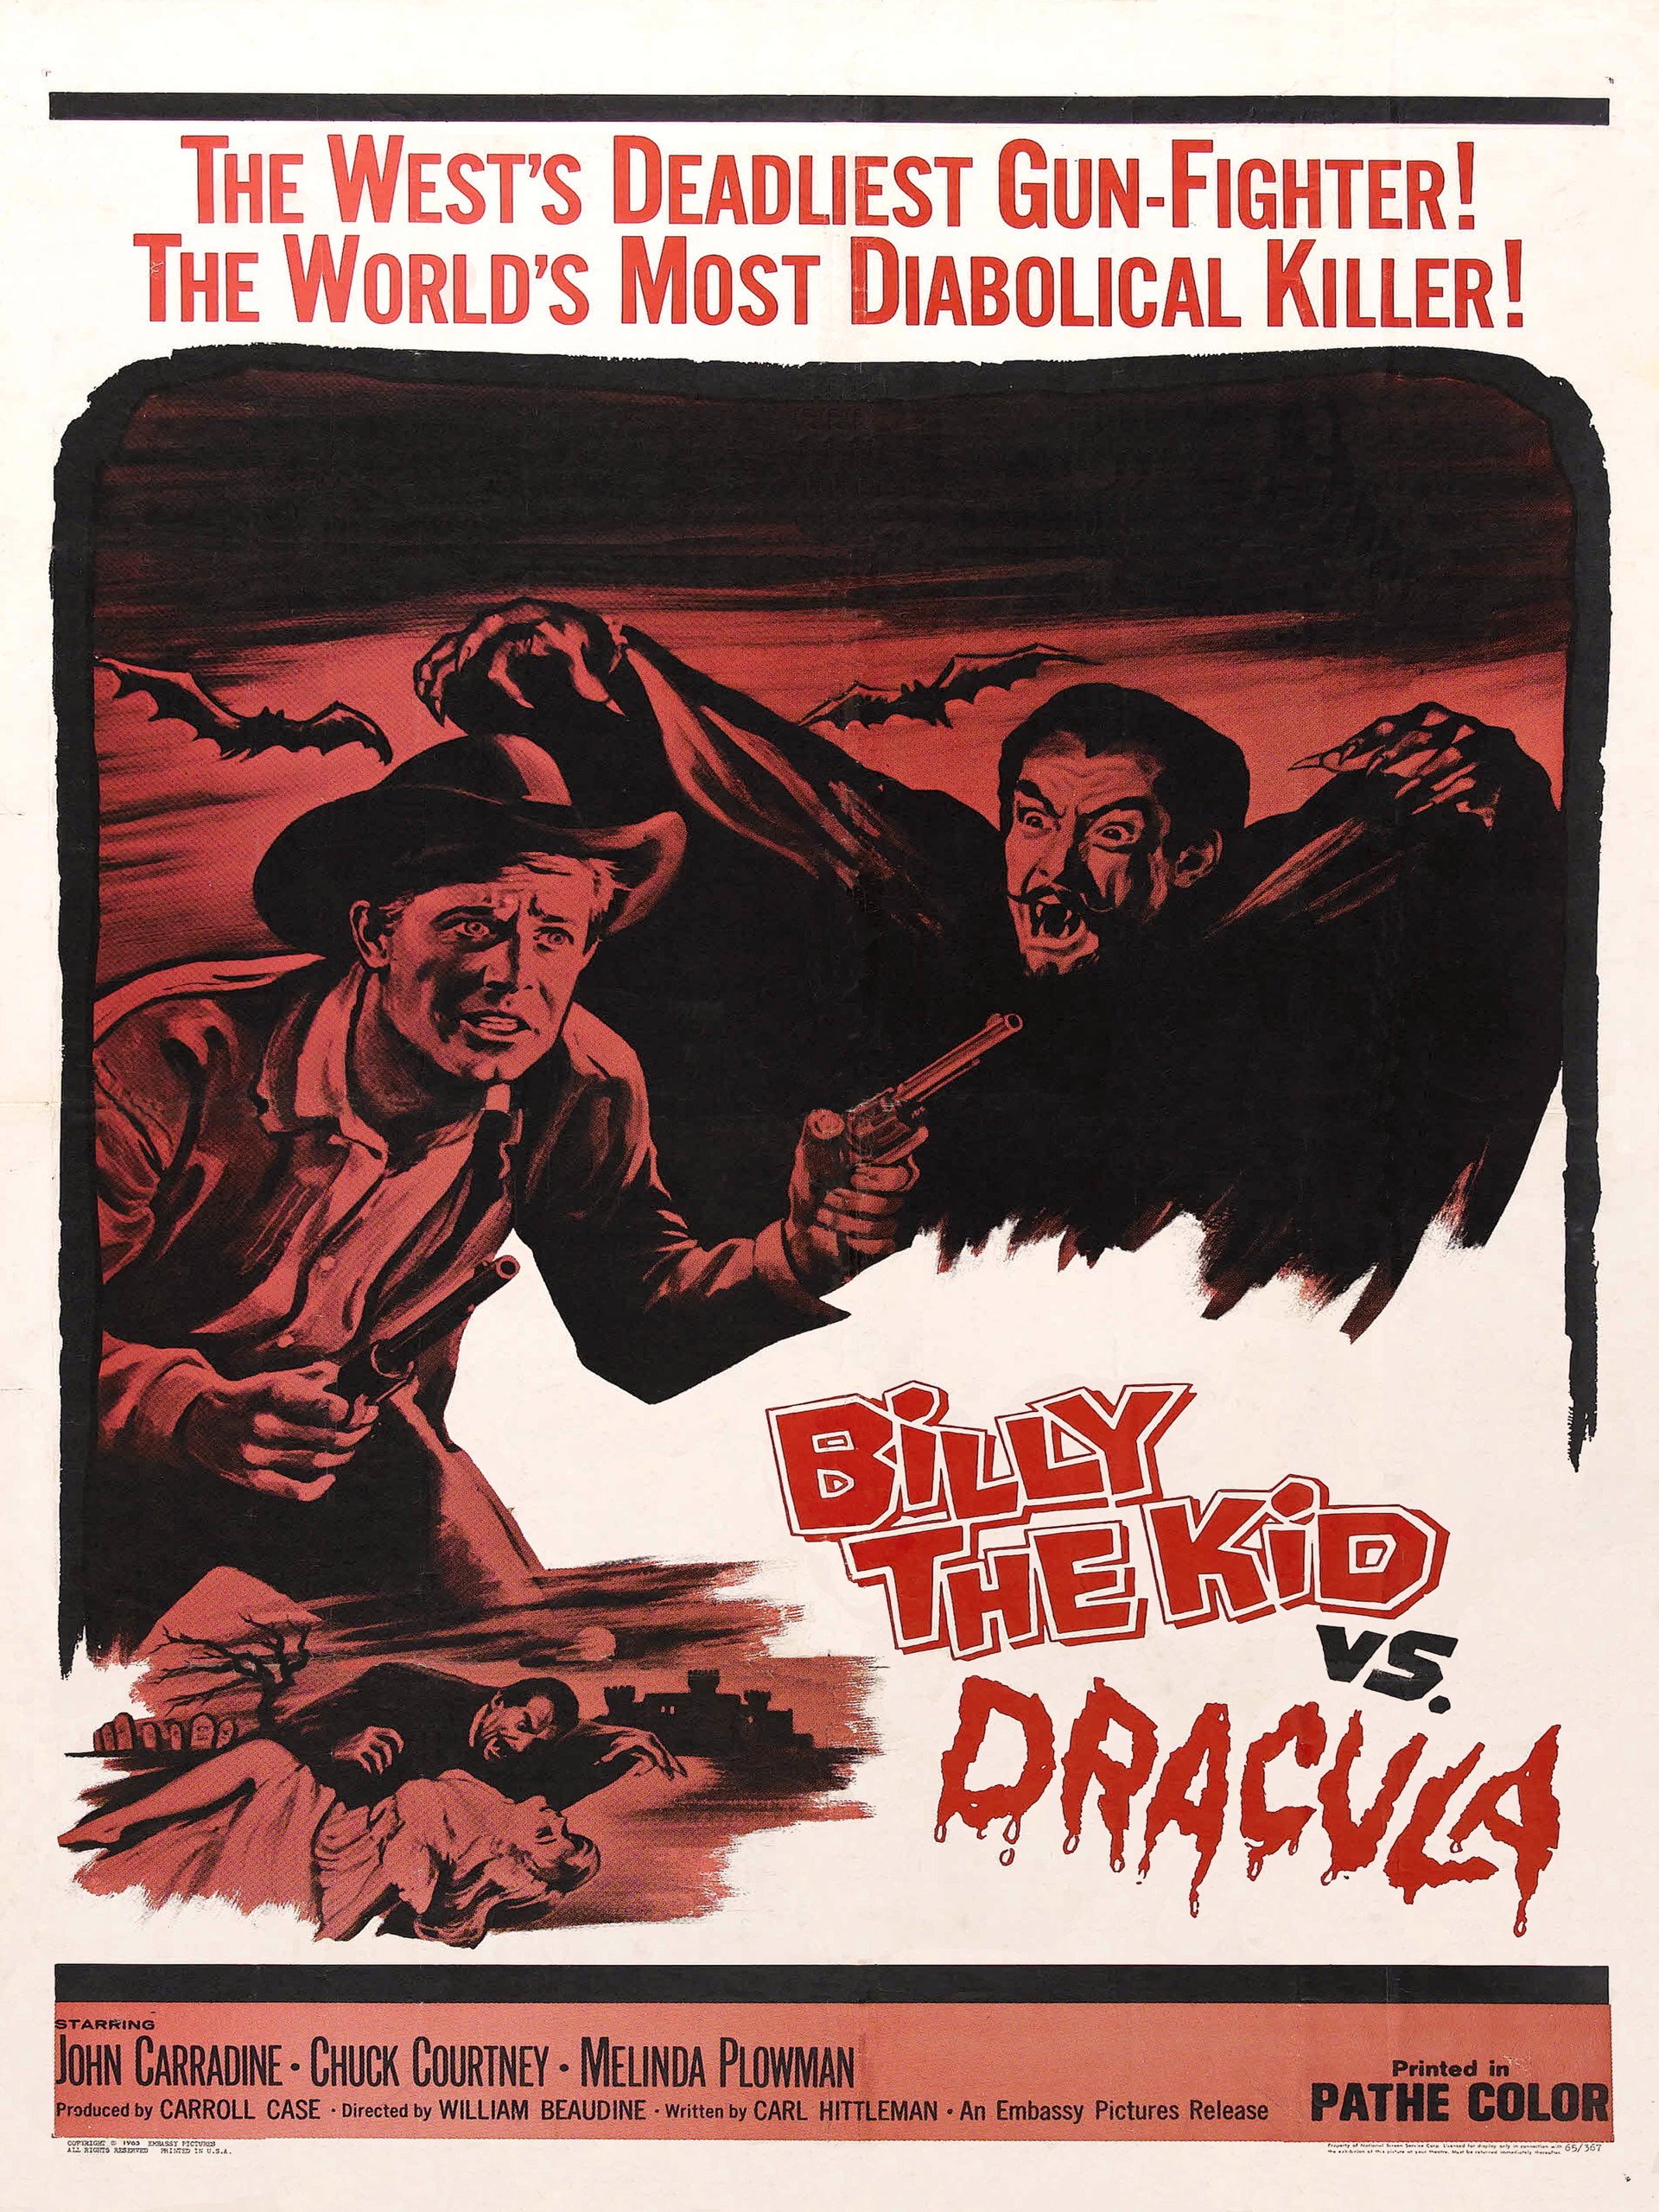 Billy the Kid Vs Dracula (19xx) starring John Carradine, Chuck Courtney, Melinda Plowman